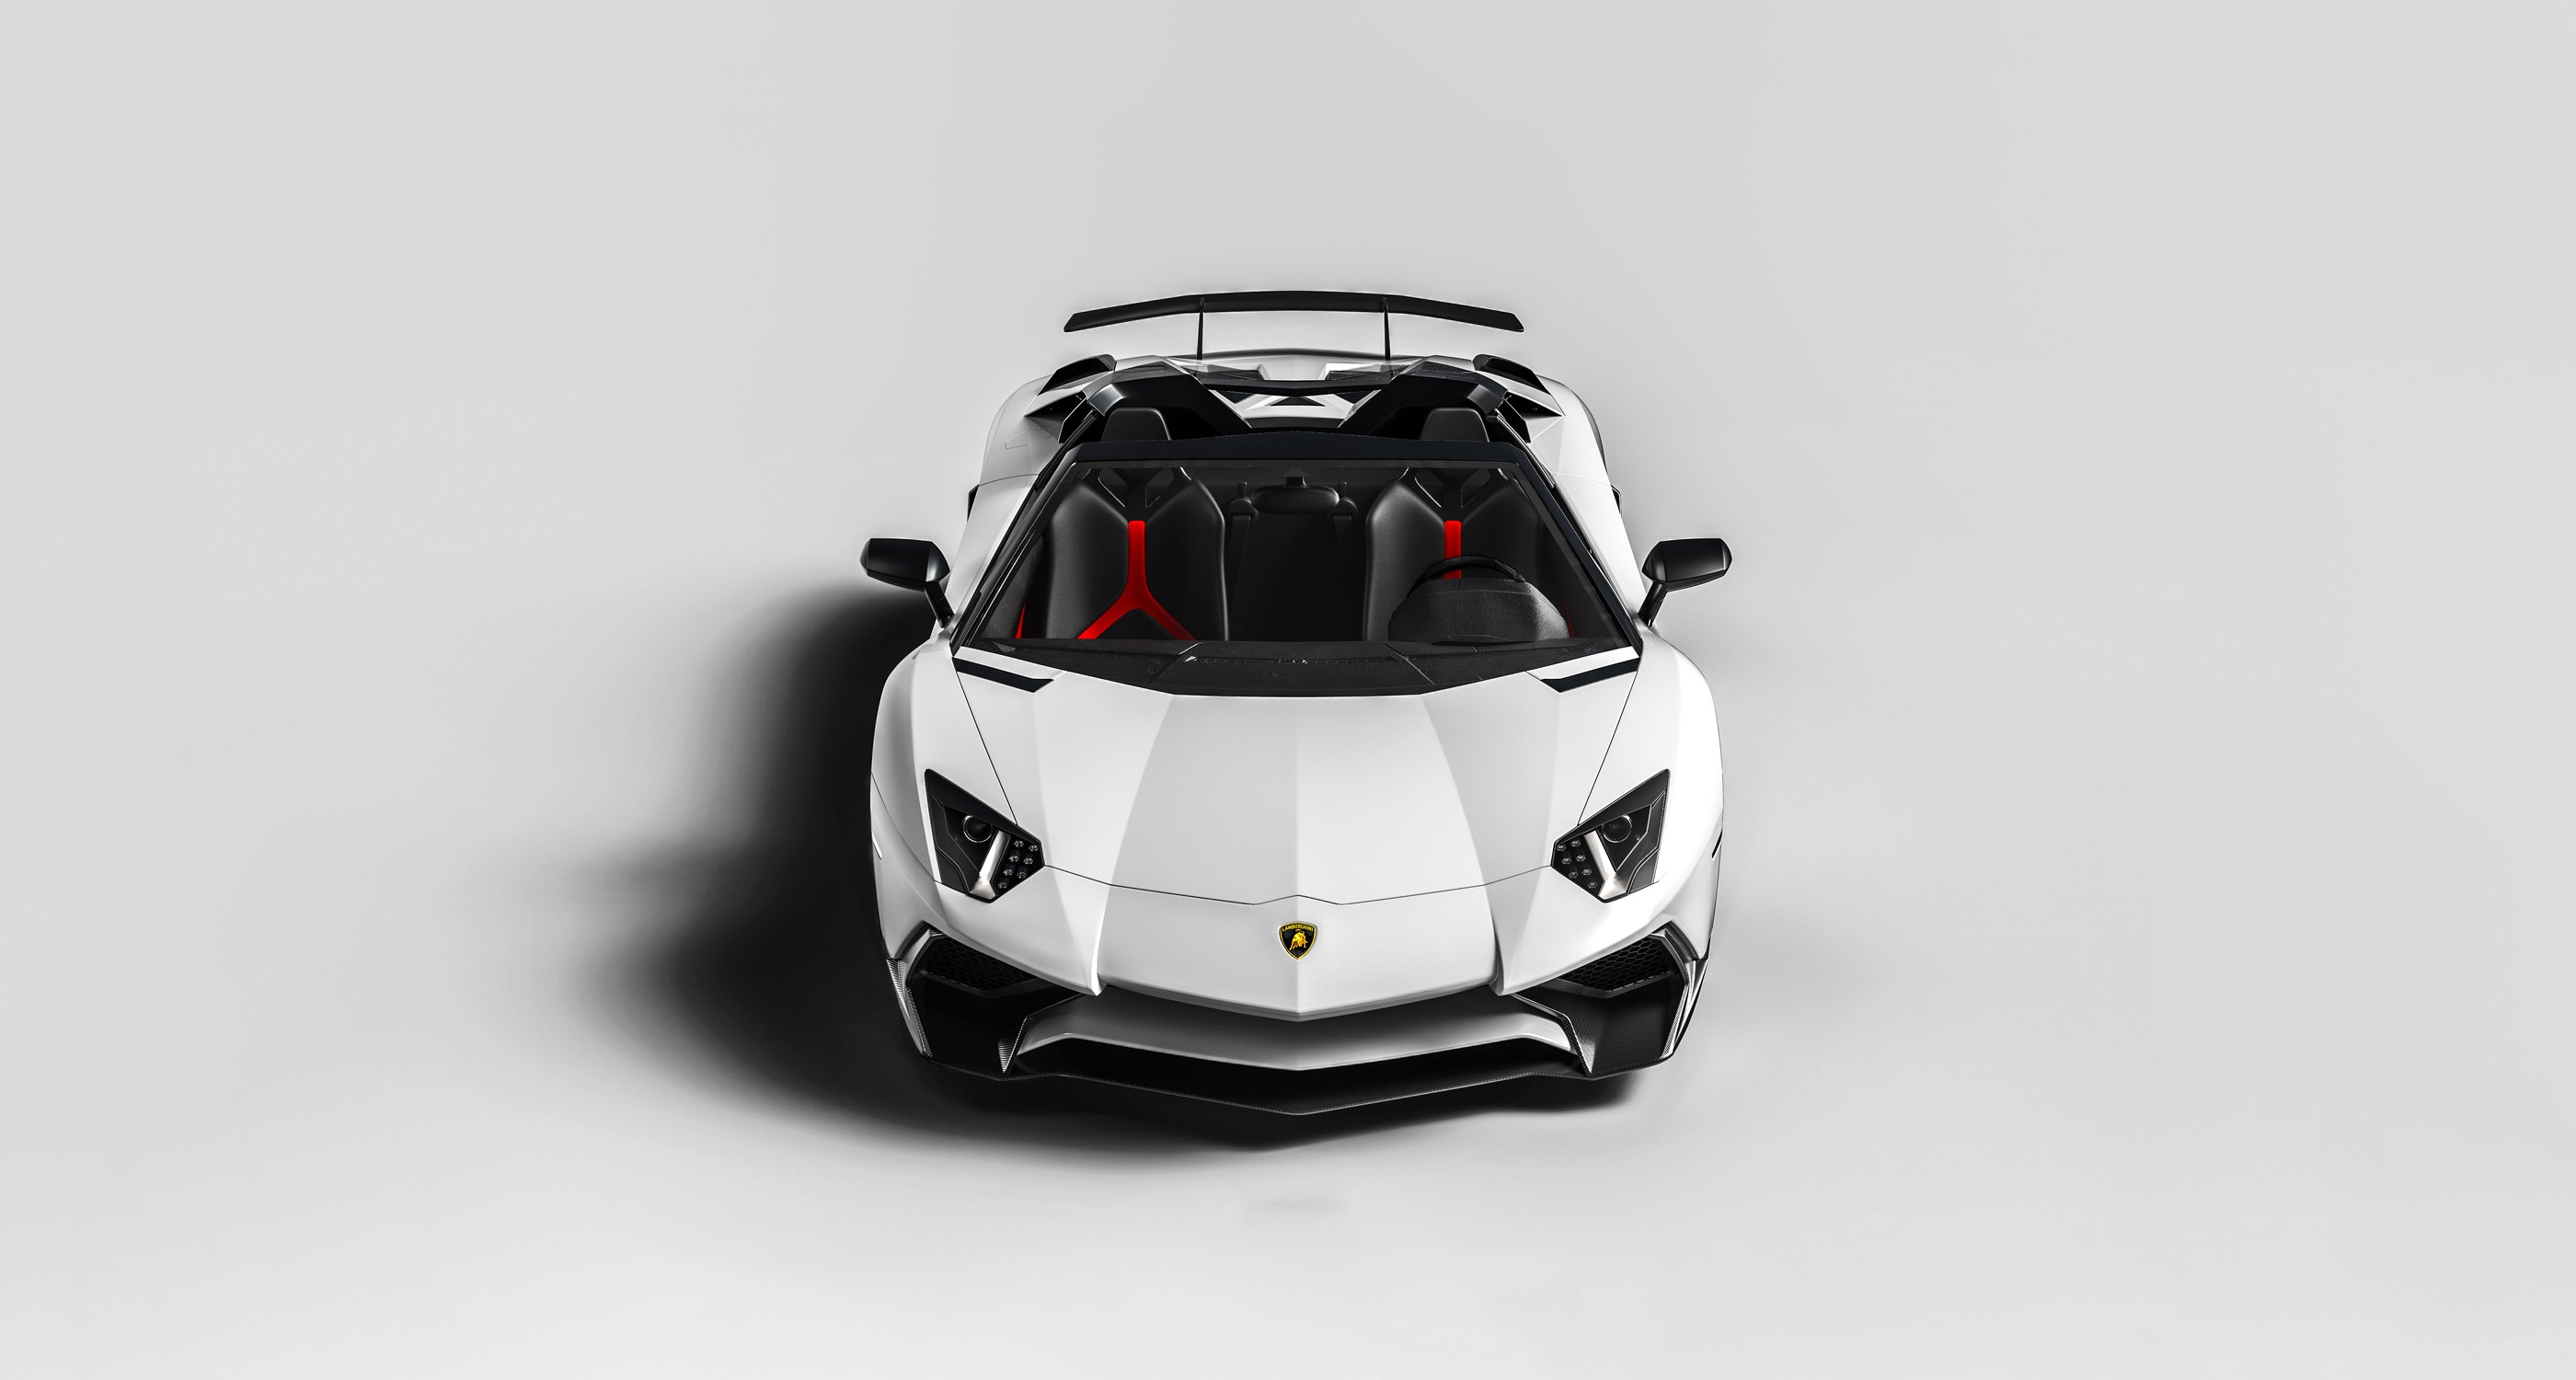 Baixe gratuitamente a imagem Lamborghini, Carro, Super Carro, Lamborghini Aventador, Veículos, Carro Branco, Lamborghini Aventador Sv na área de trabalho do seu PC